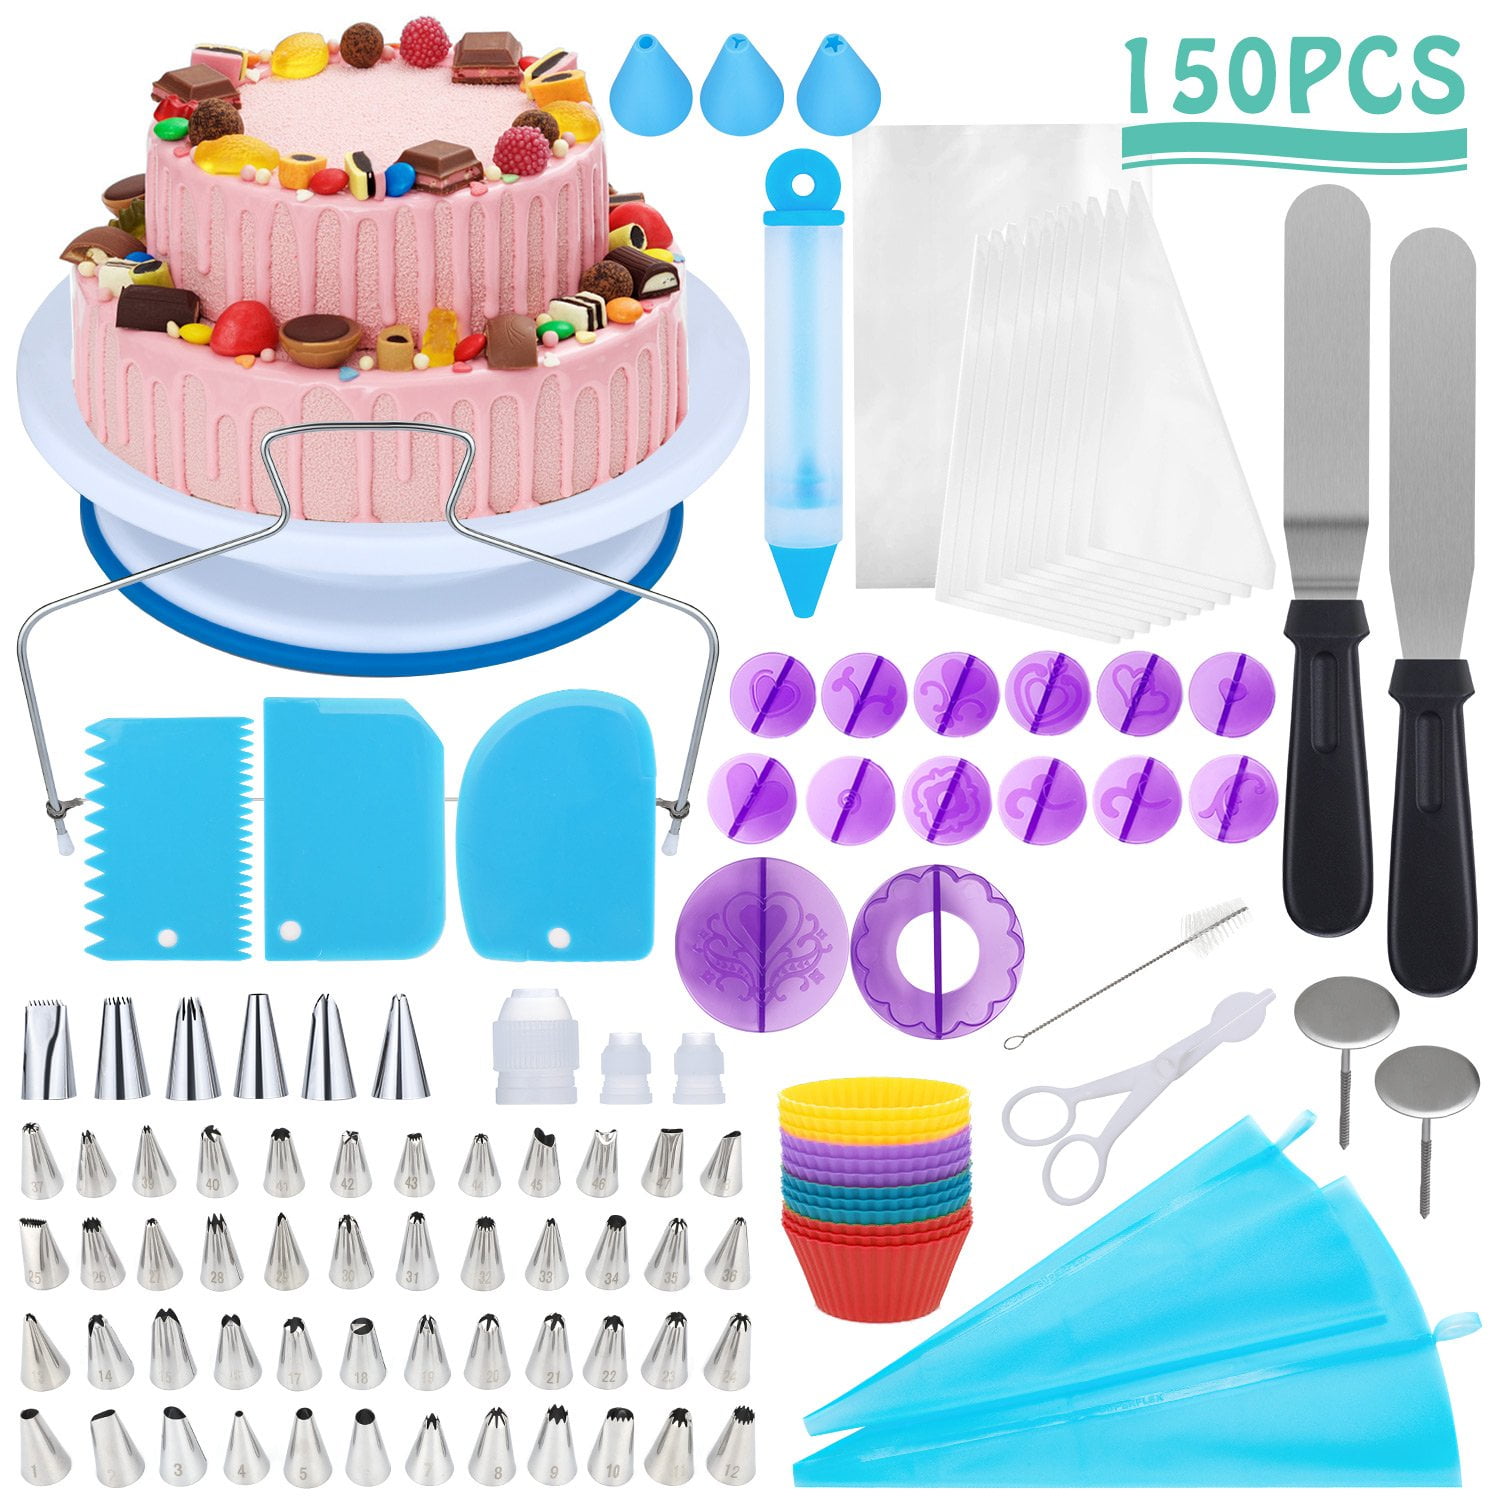 66 pcs Baking Supplies Kit DIY Cake Cupcake Decorating Icing tips Set Tools New 